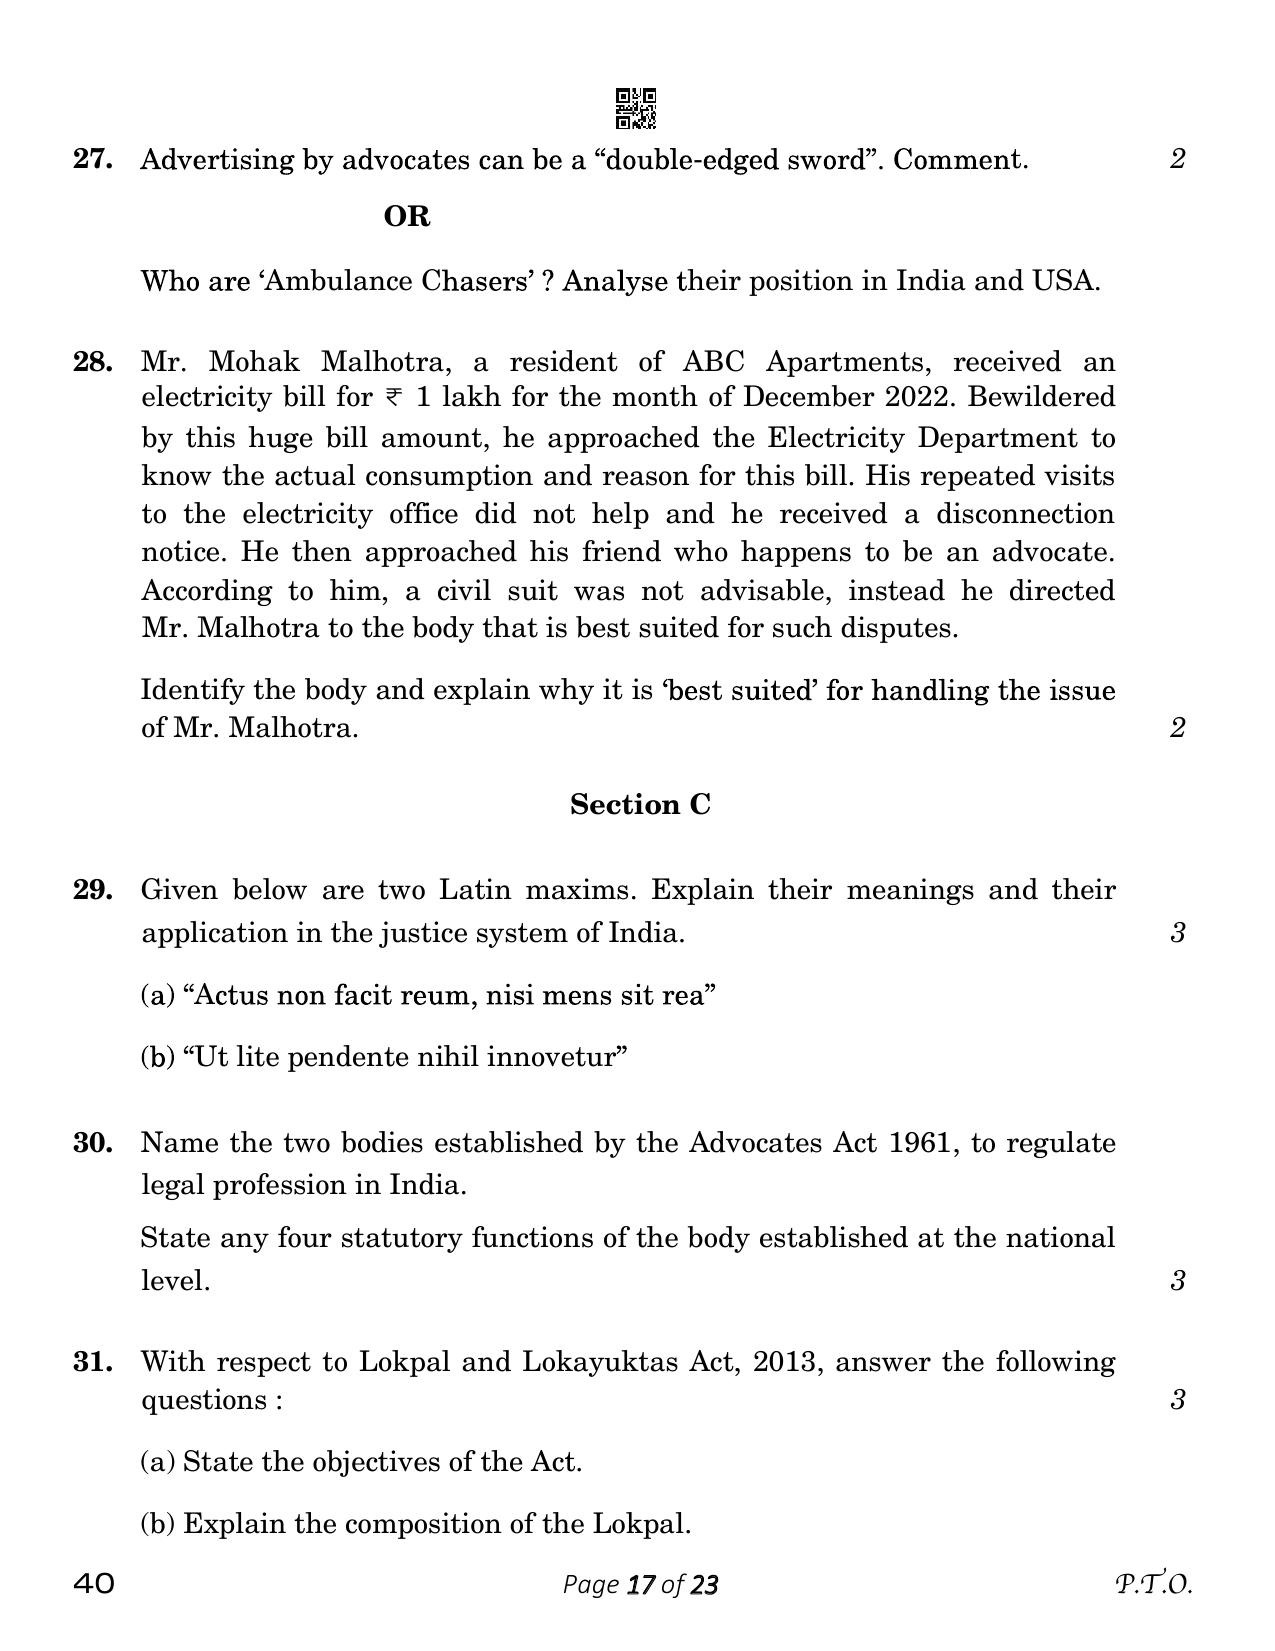 CBSE Class 12 Legal Studies (Compartment) 2023 Question Paper - Page 17